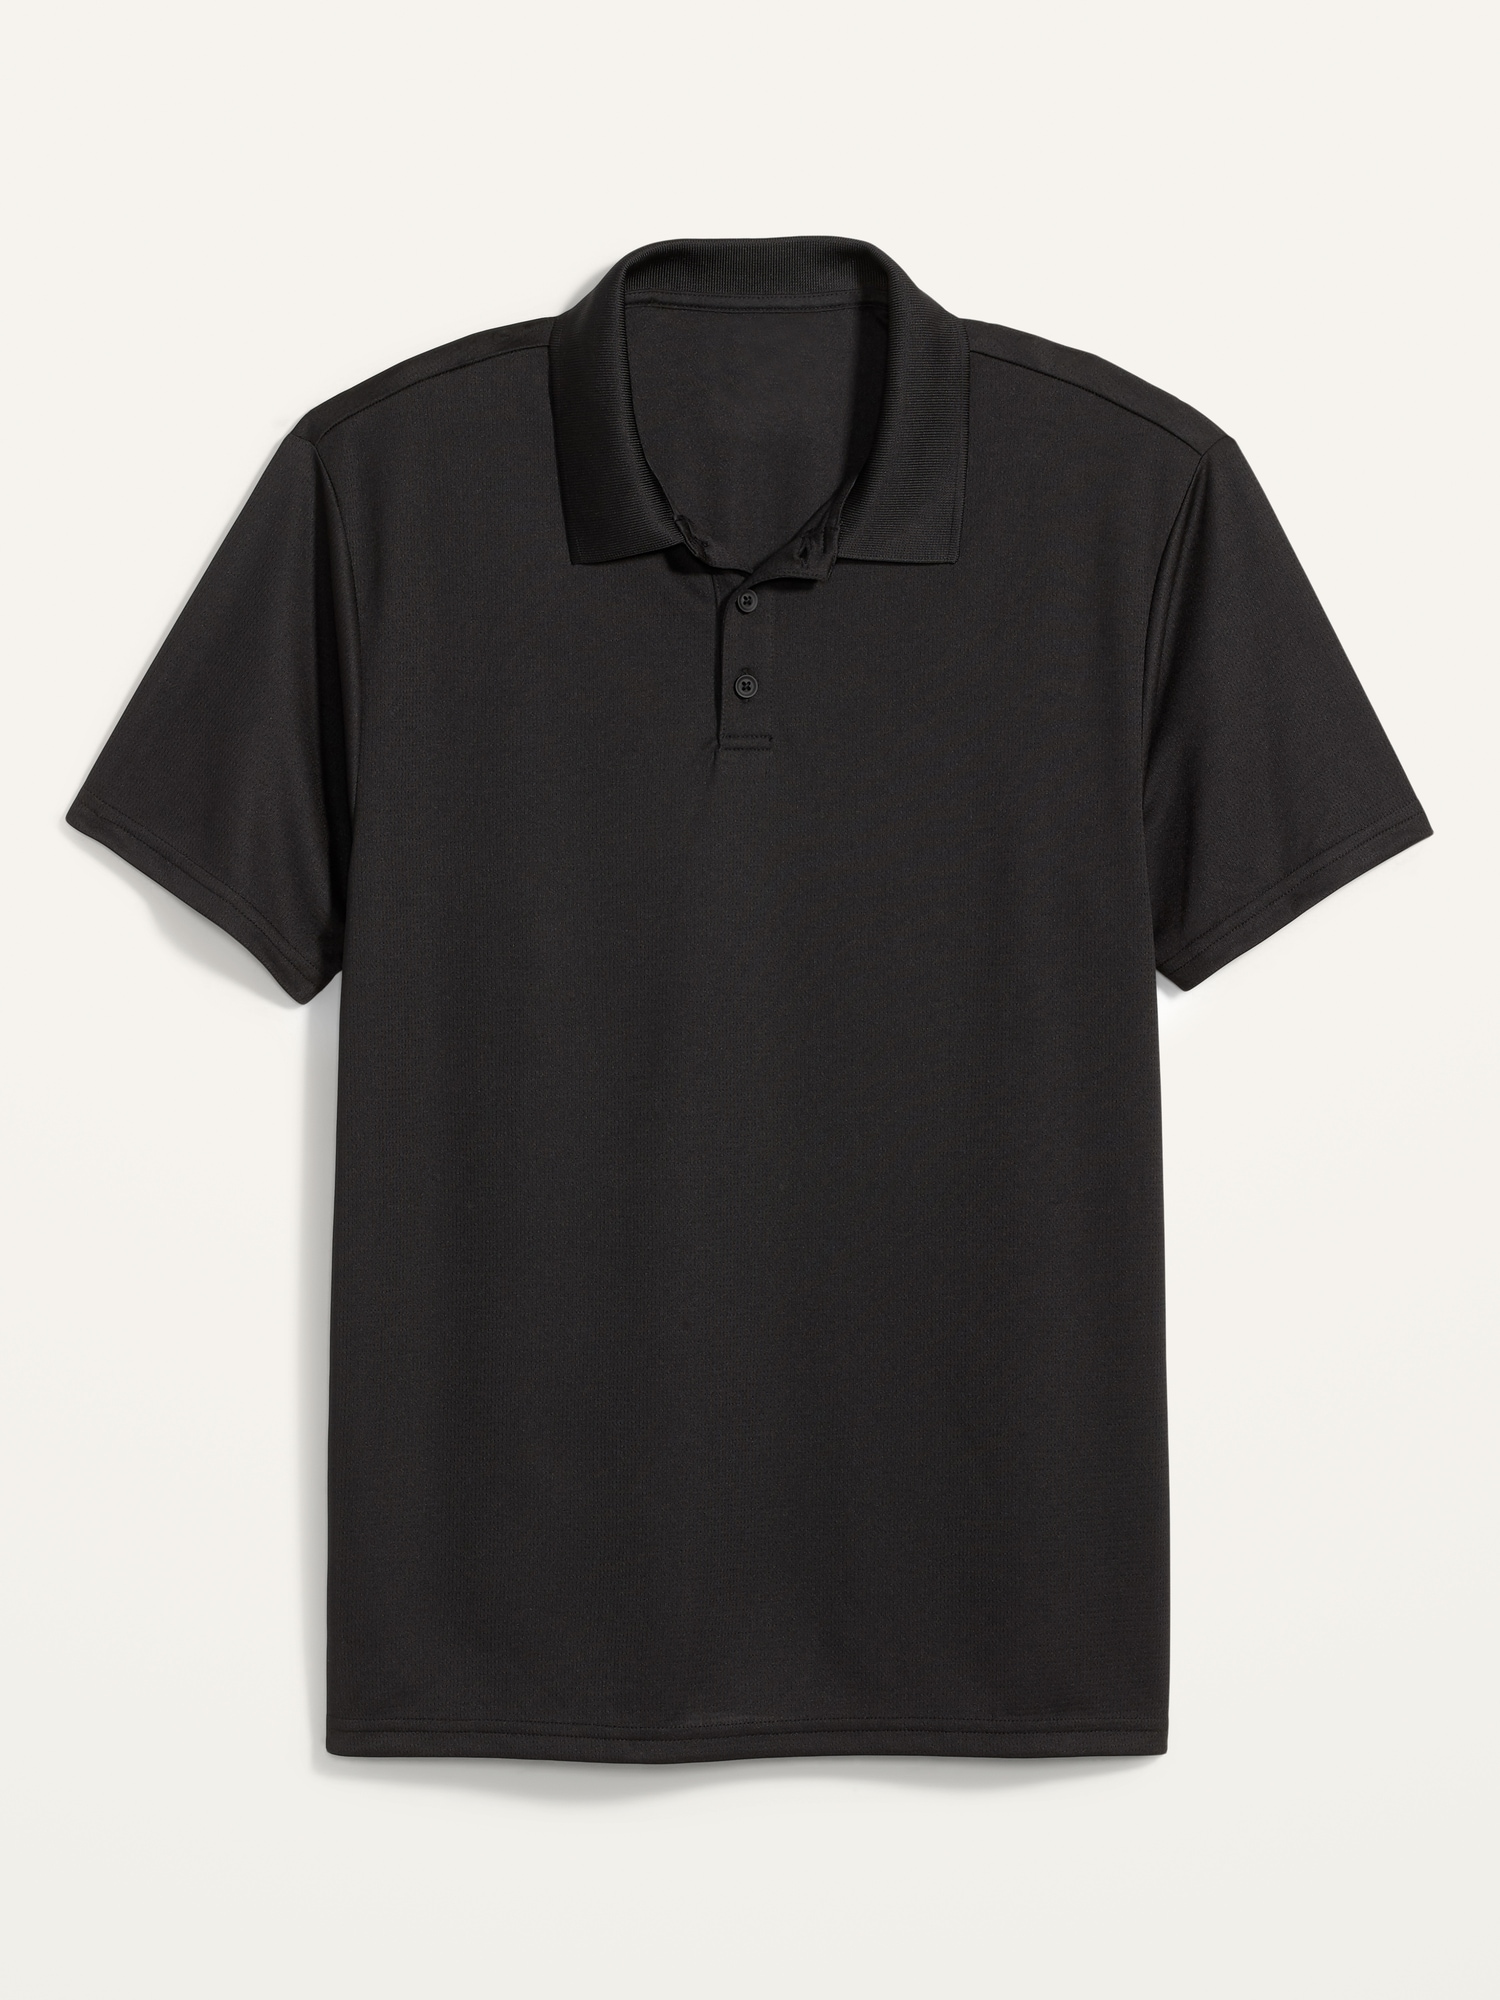 Go-Dry Cool Odor-Control Mesh Core Polo Shirt for Men